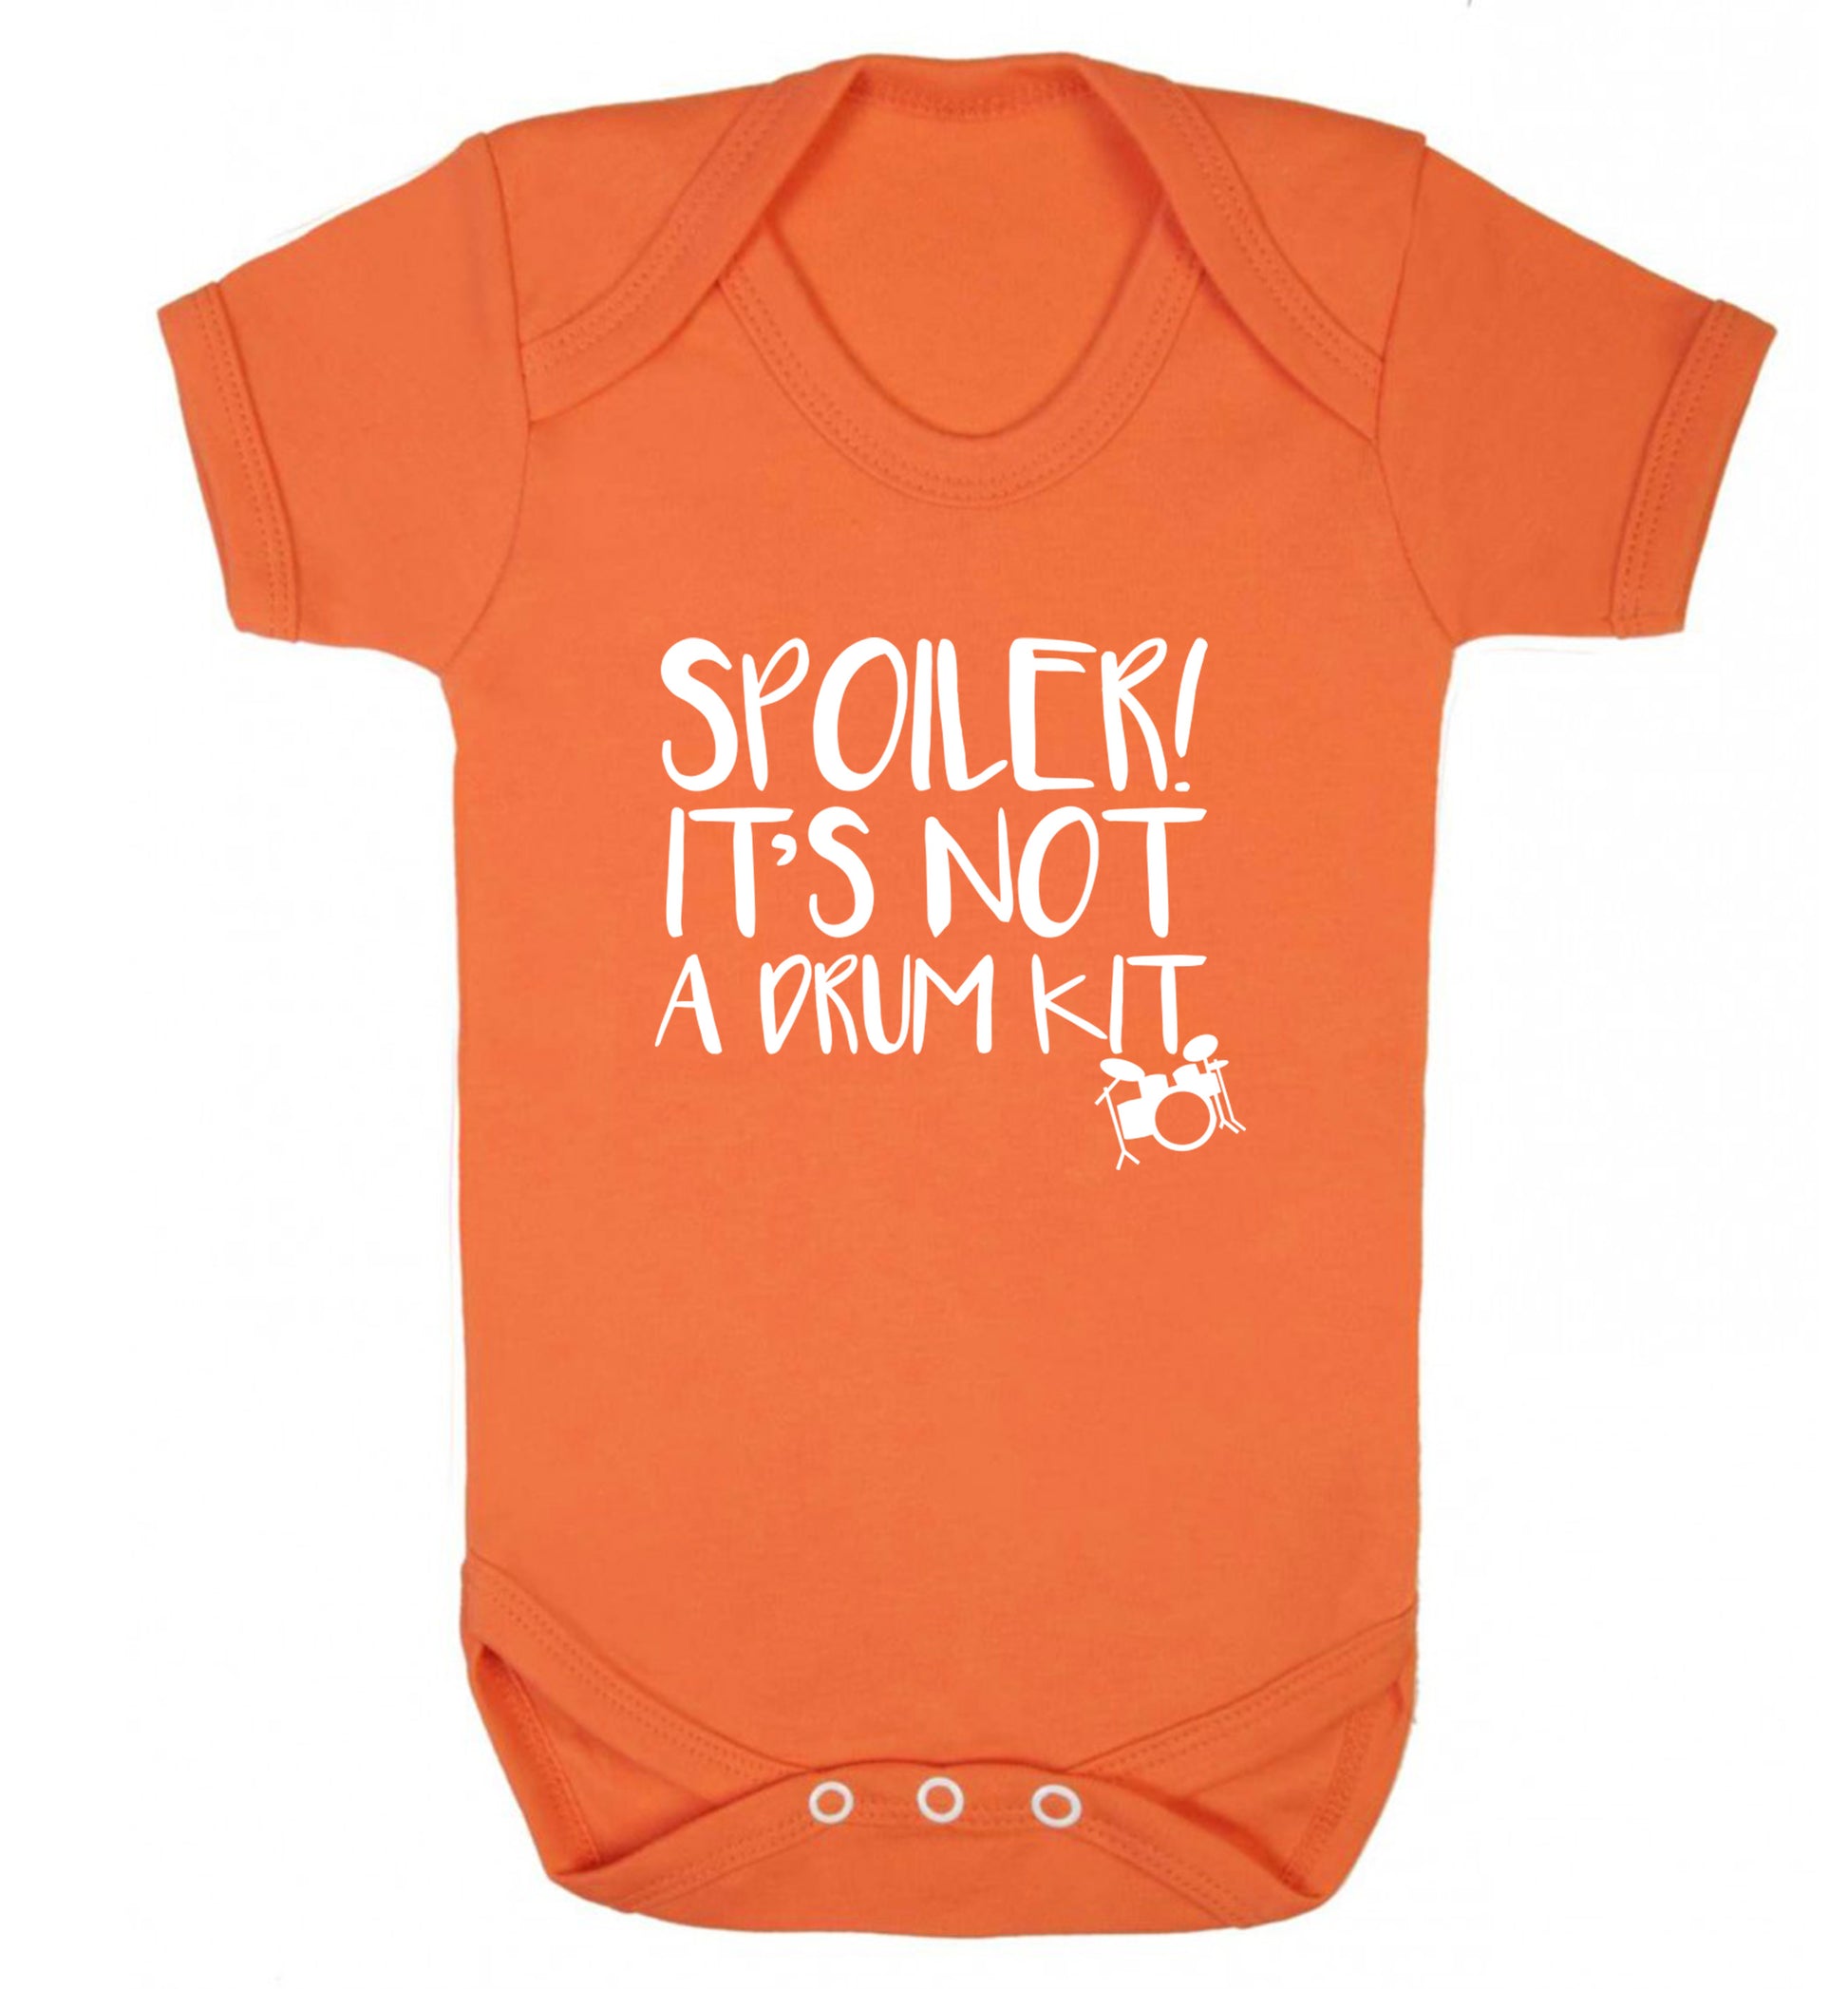 Spoiler it's not a drum kit Baby Vest orange 18-24 months